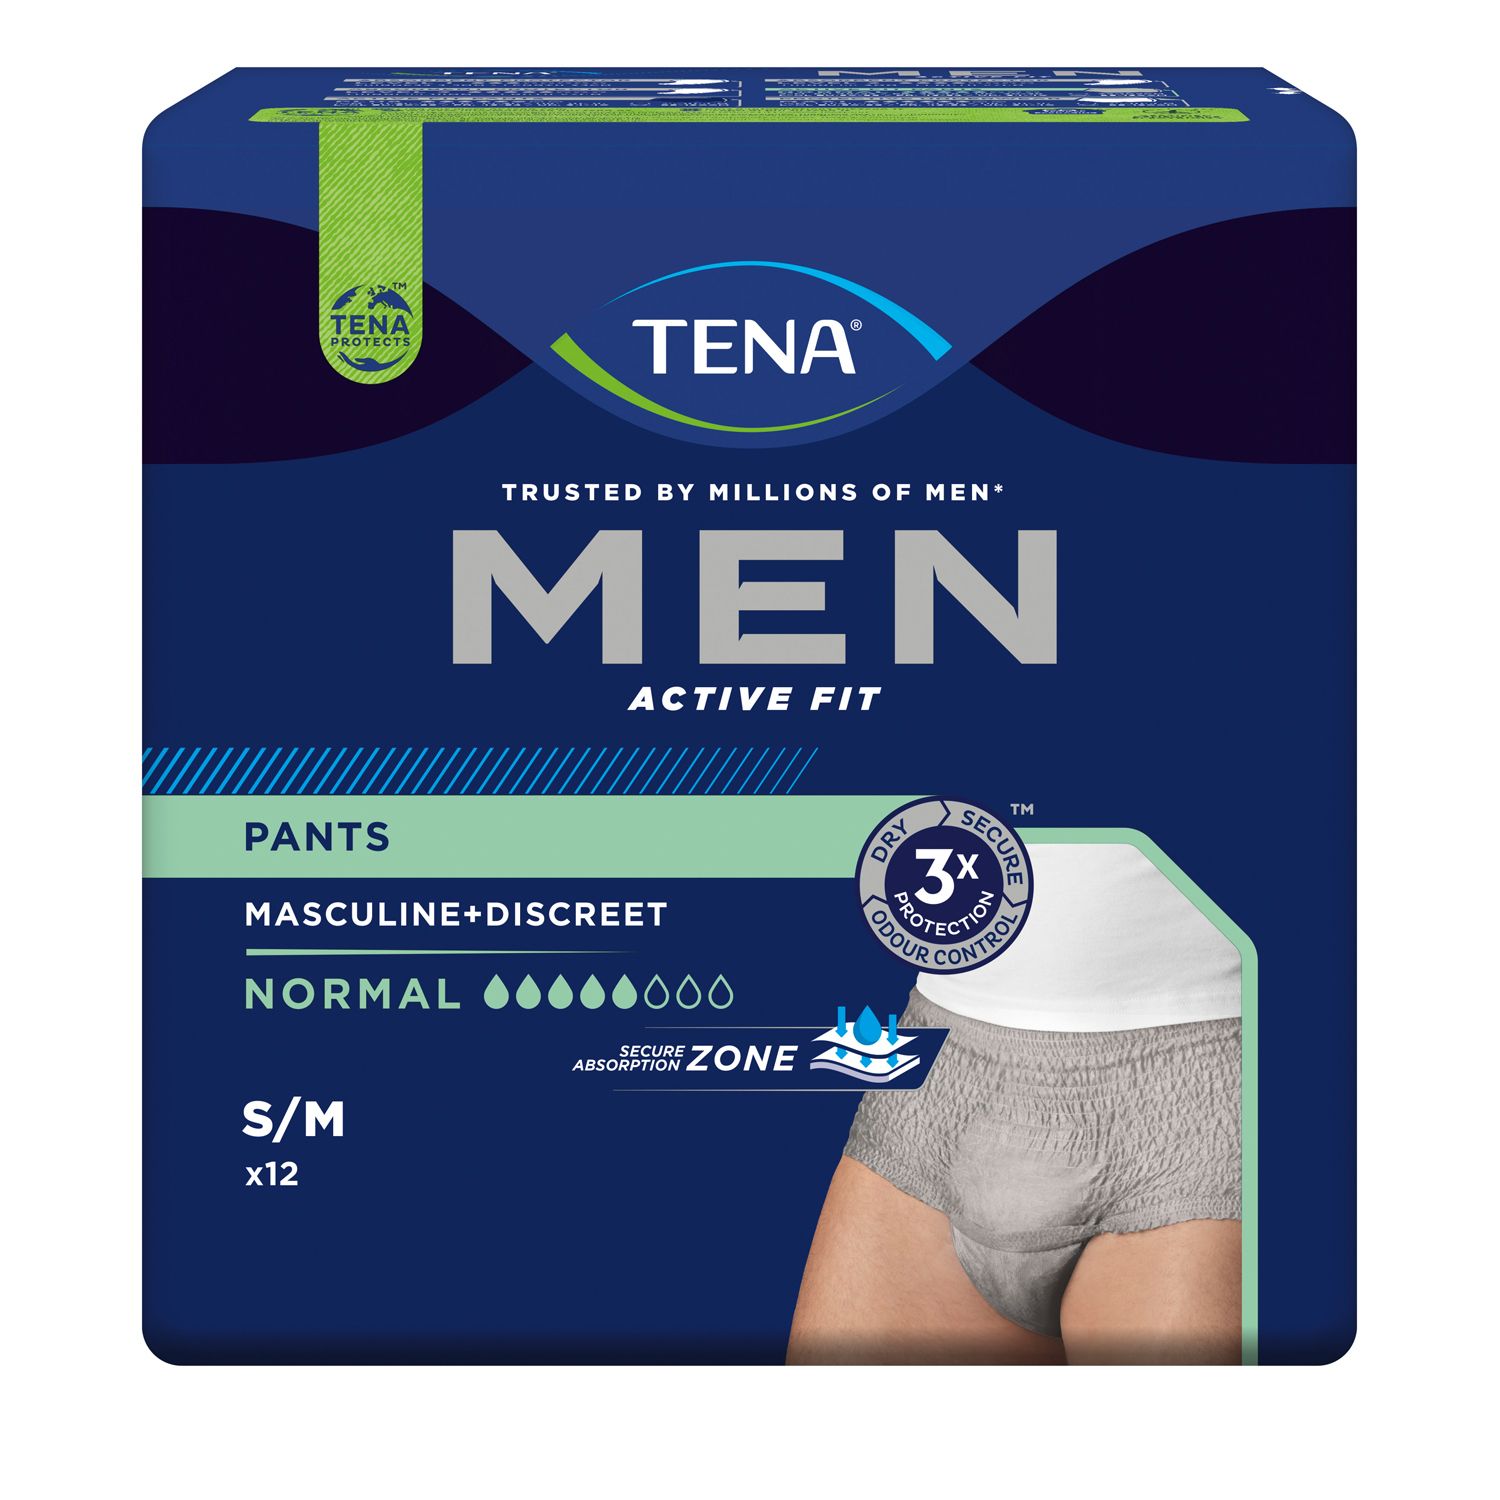 TENA MEN ACTIVE FIT PANTS S/M